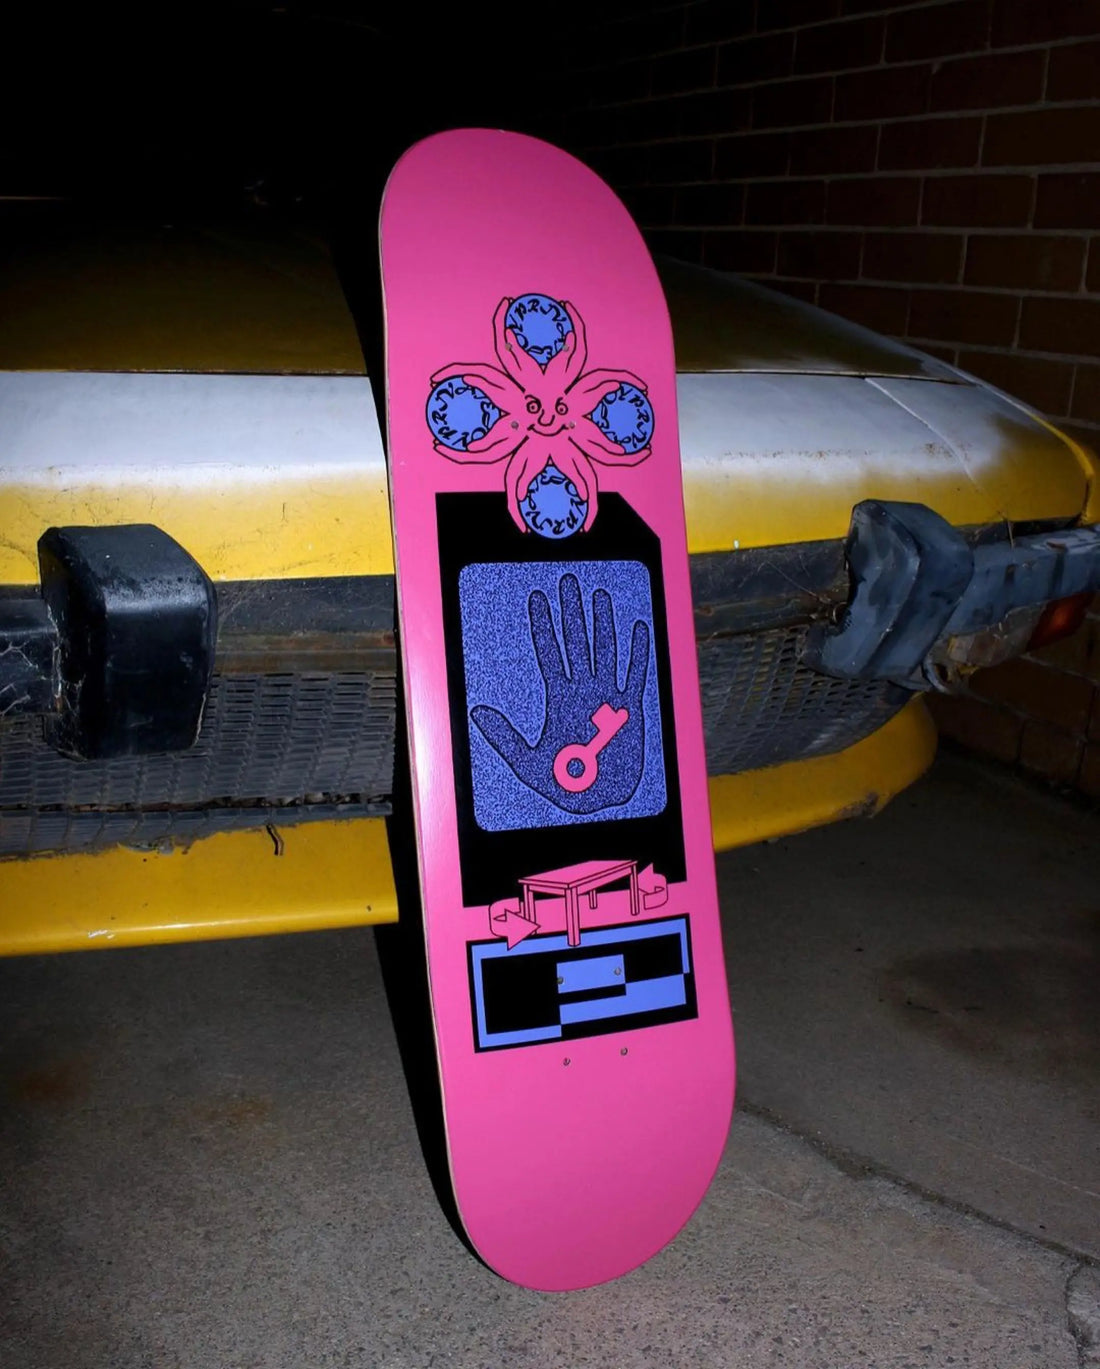 Skateboard deck leaning against a car